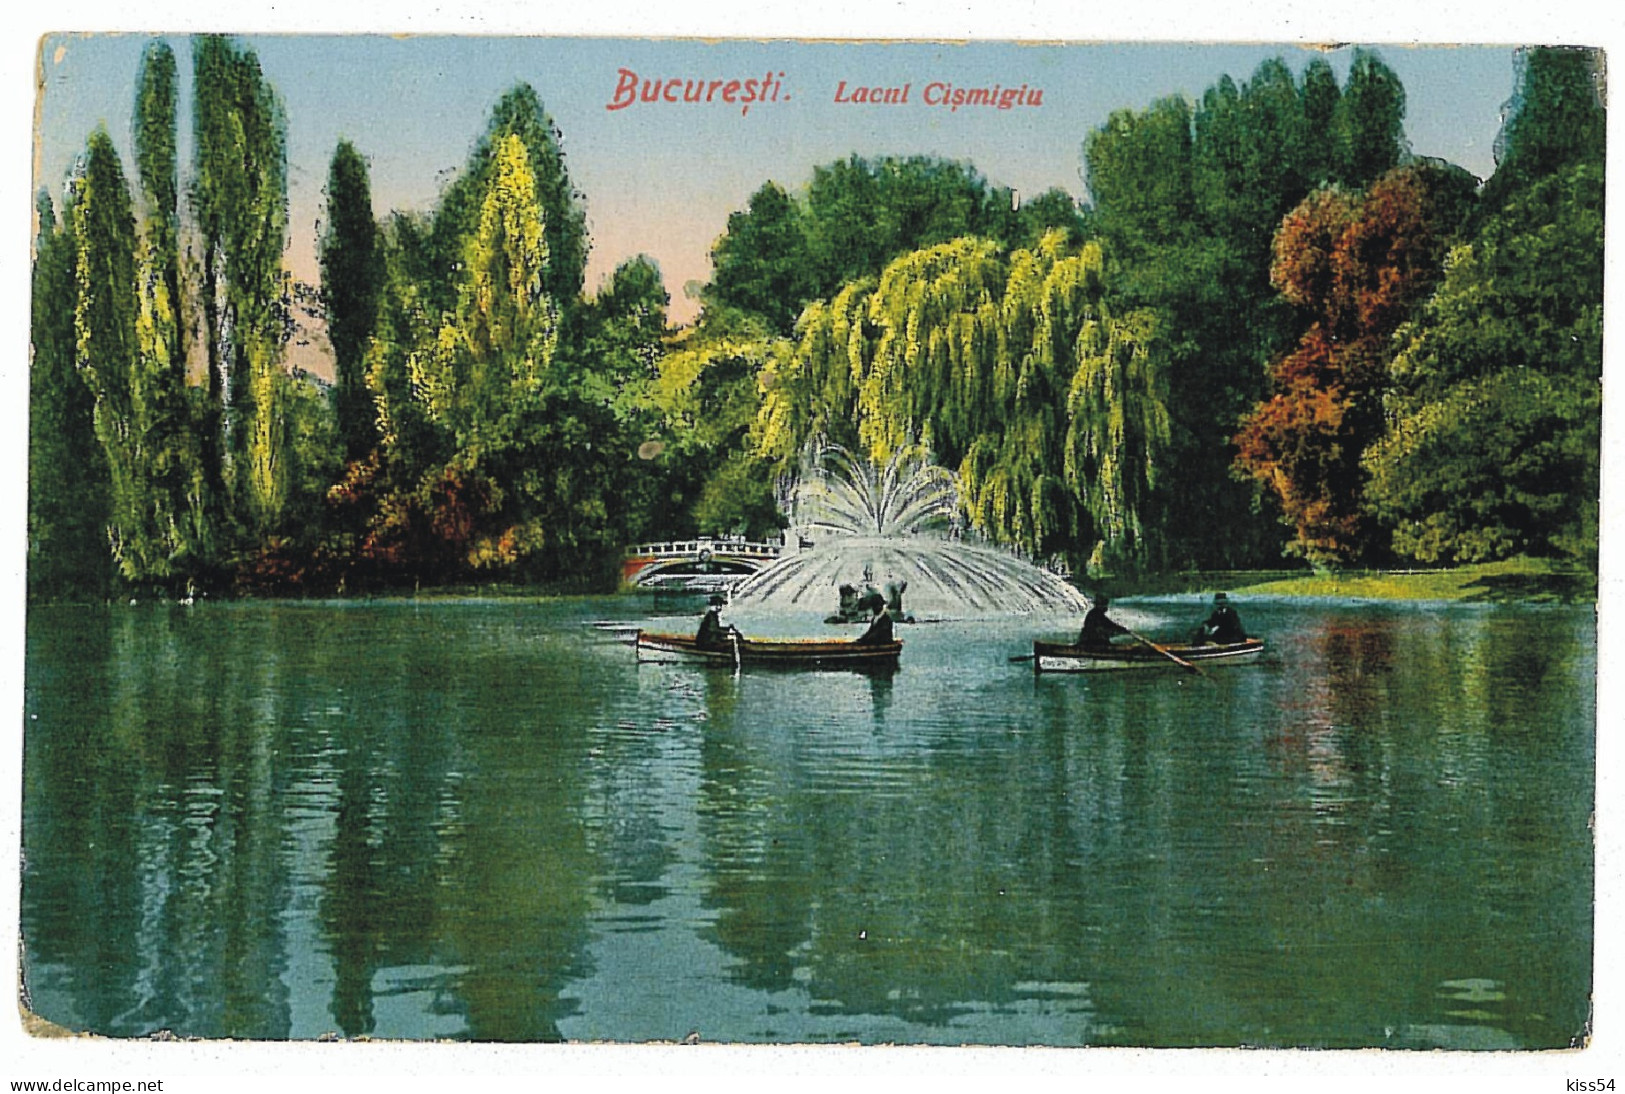 RO 52 - 1731 BUCURESTI, Lake Cismigiu, Romania - Old Postcard - Used - 1931 - Romania